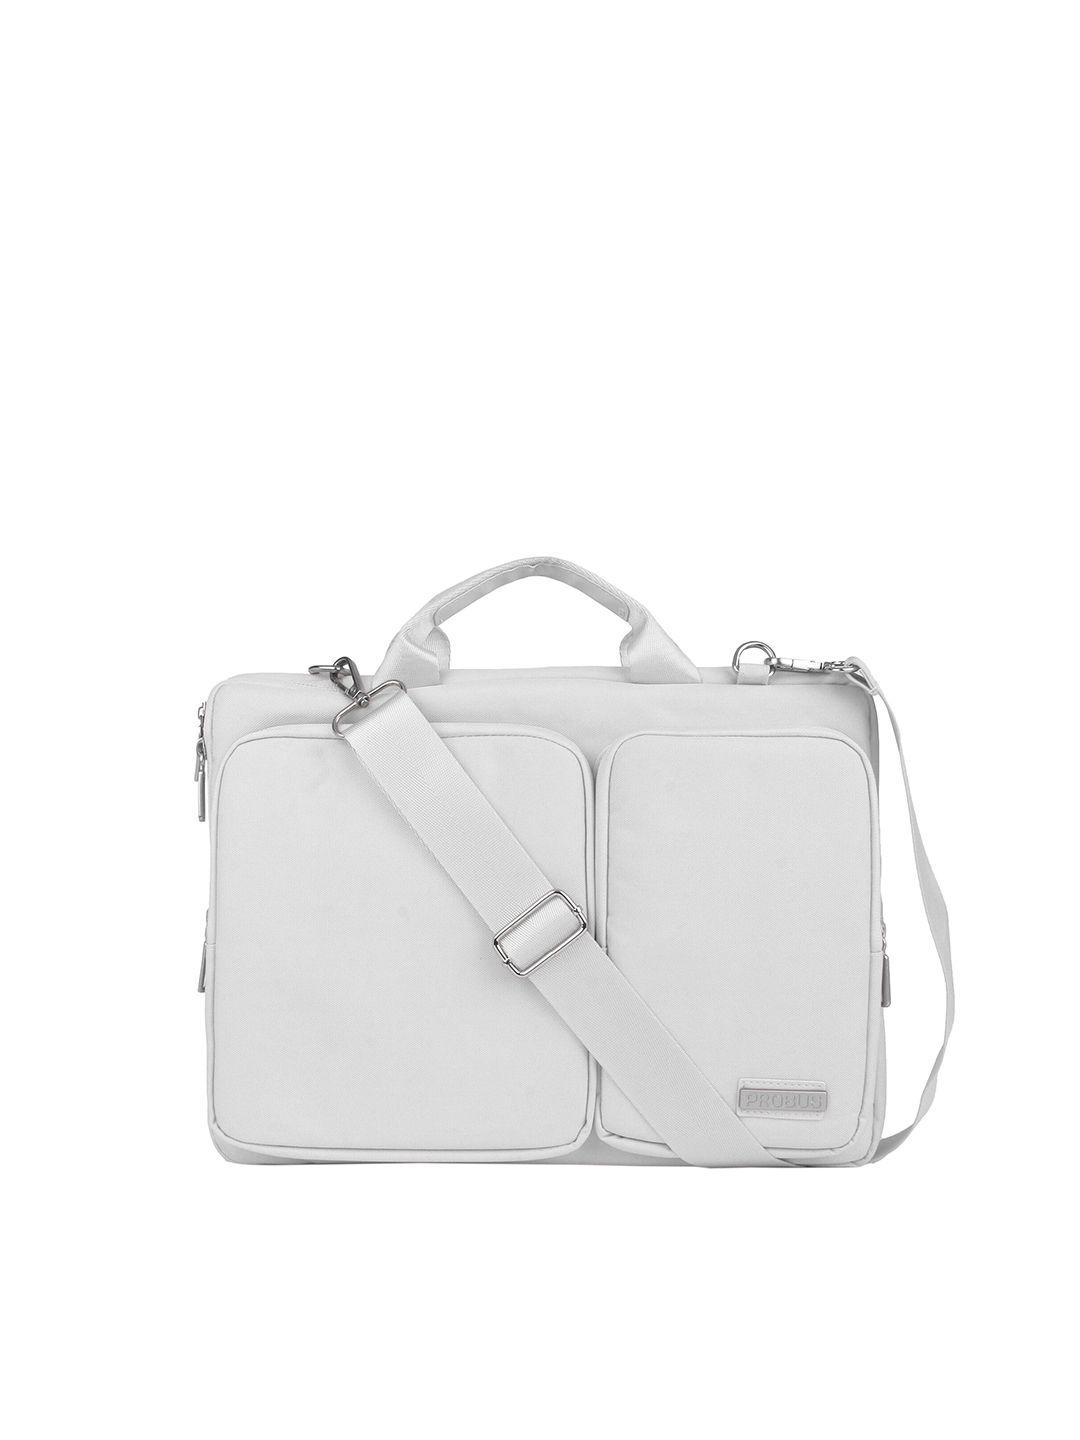 probus unisex silver-toned & white laptop bag